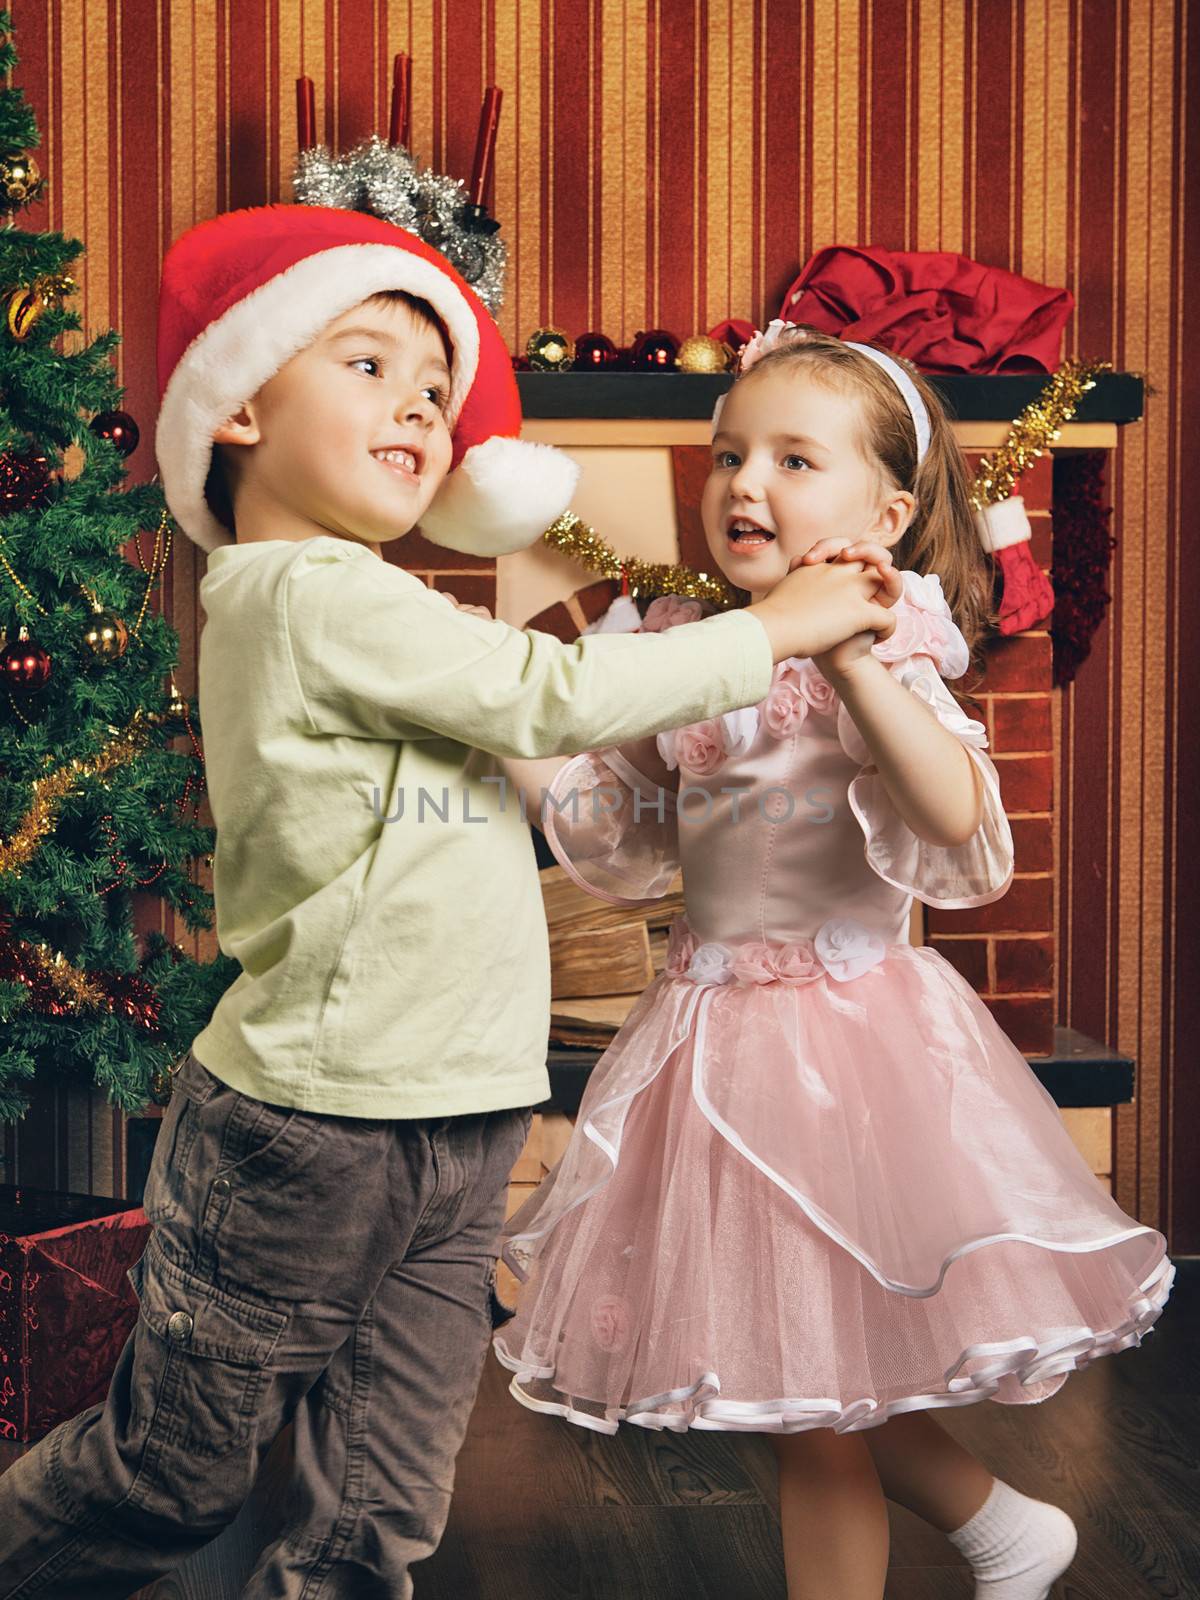 Happy Christmas Dance by petr_malyshev